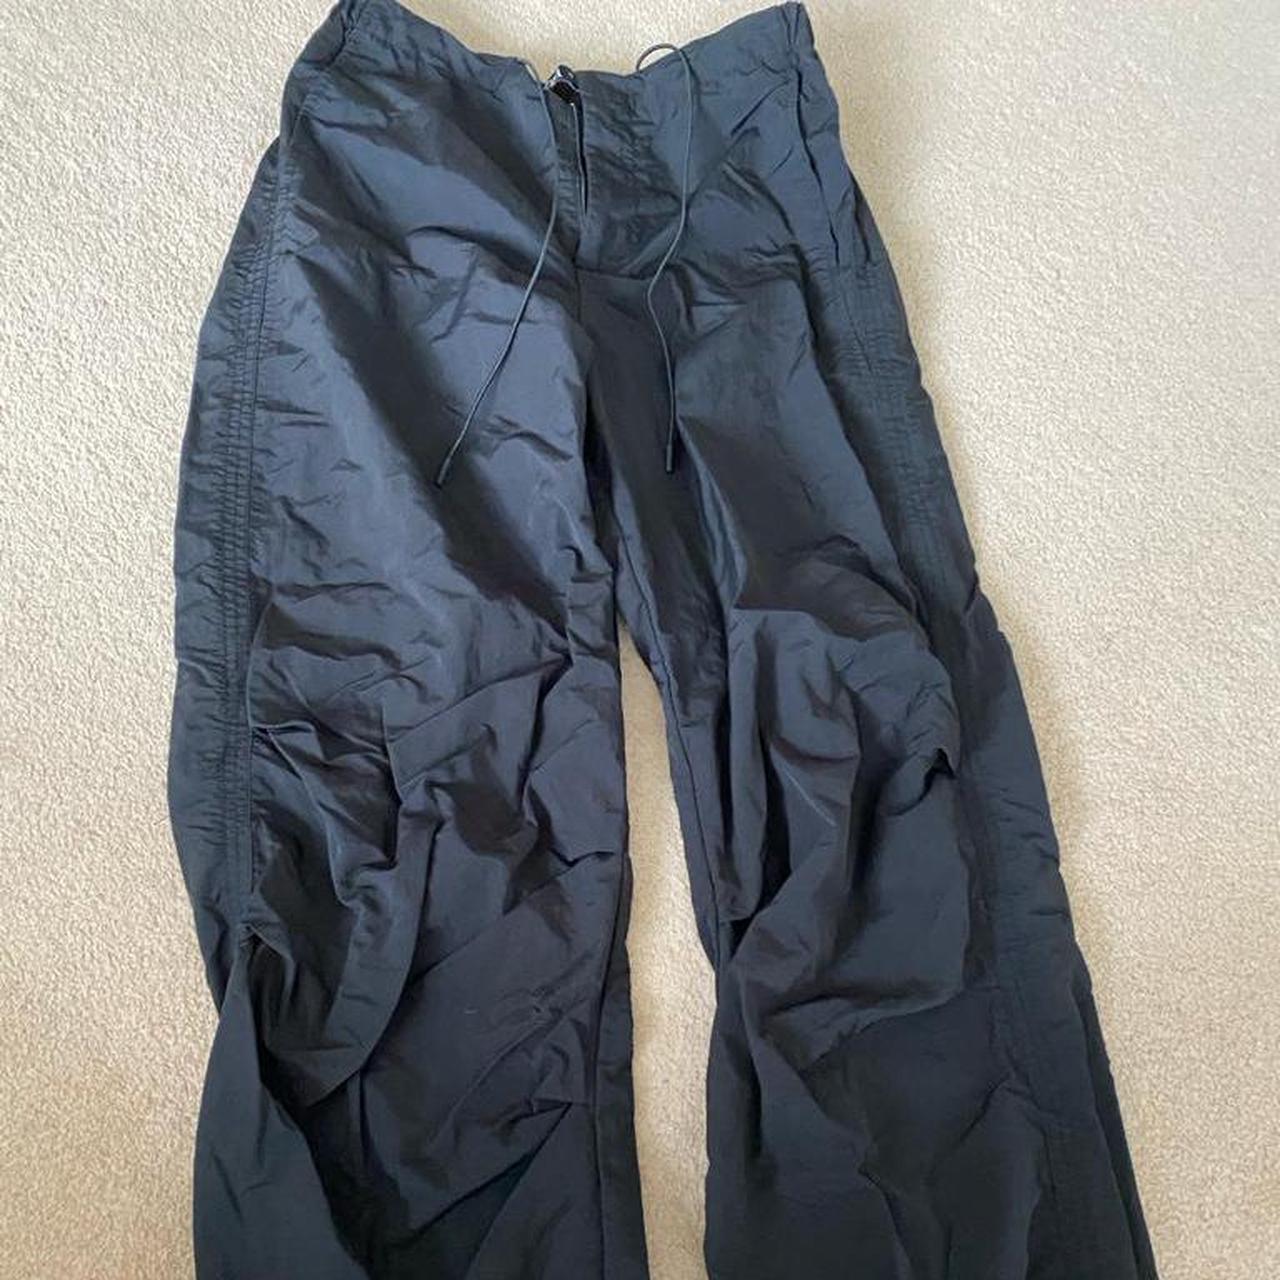 Zara black parachute trousers worn once - Depop